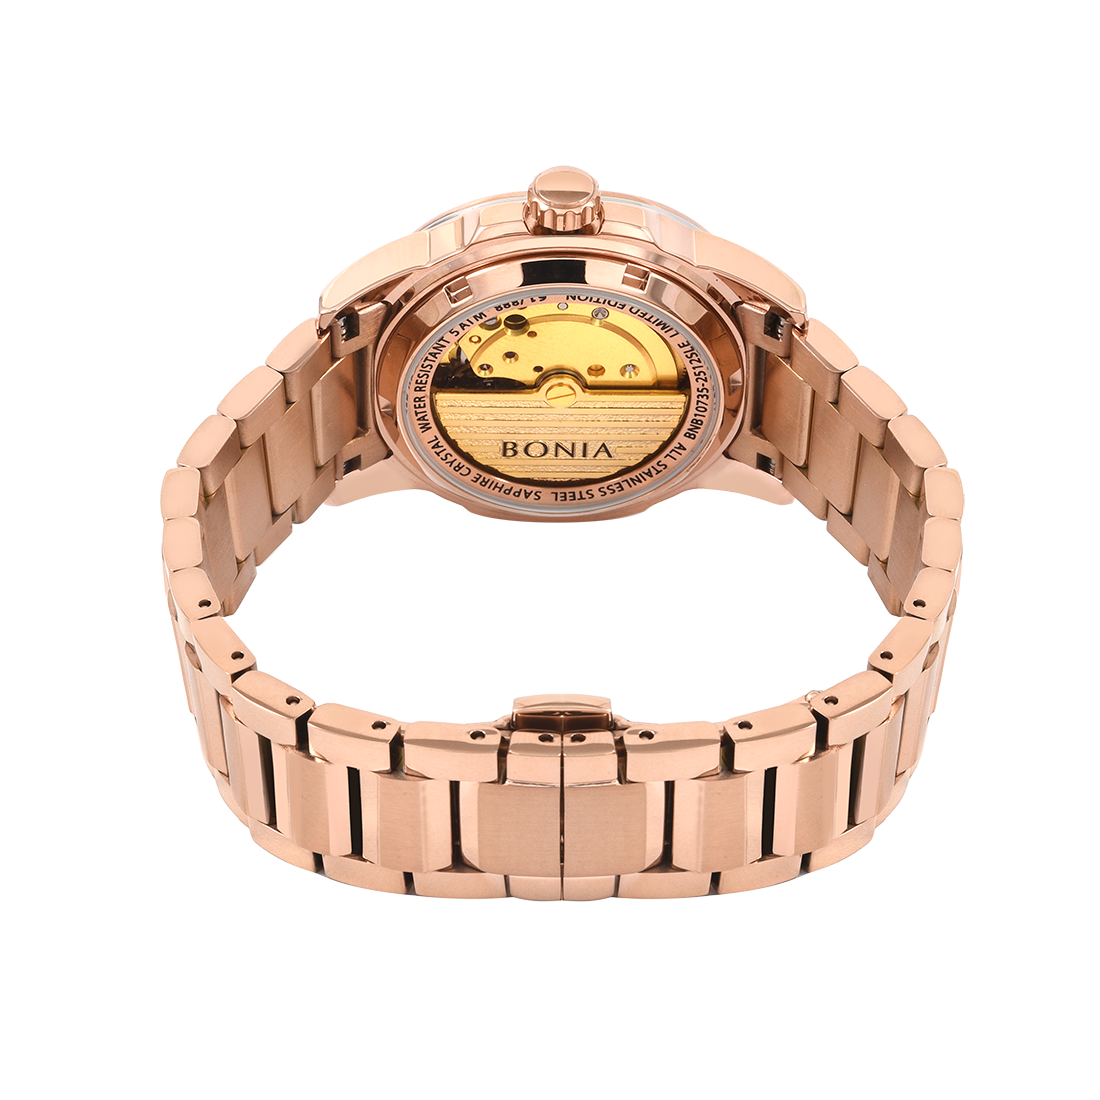 Bonia Tesoro Women Elegance Automatic Watch & Jewellery Set BNB10735-2512SLE